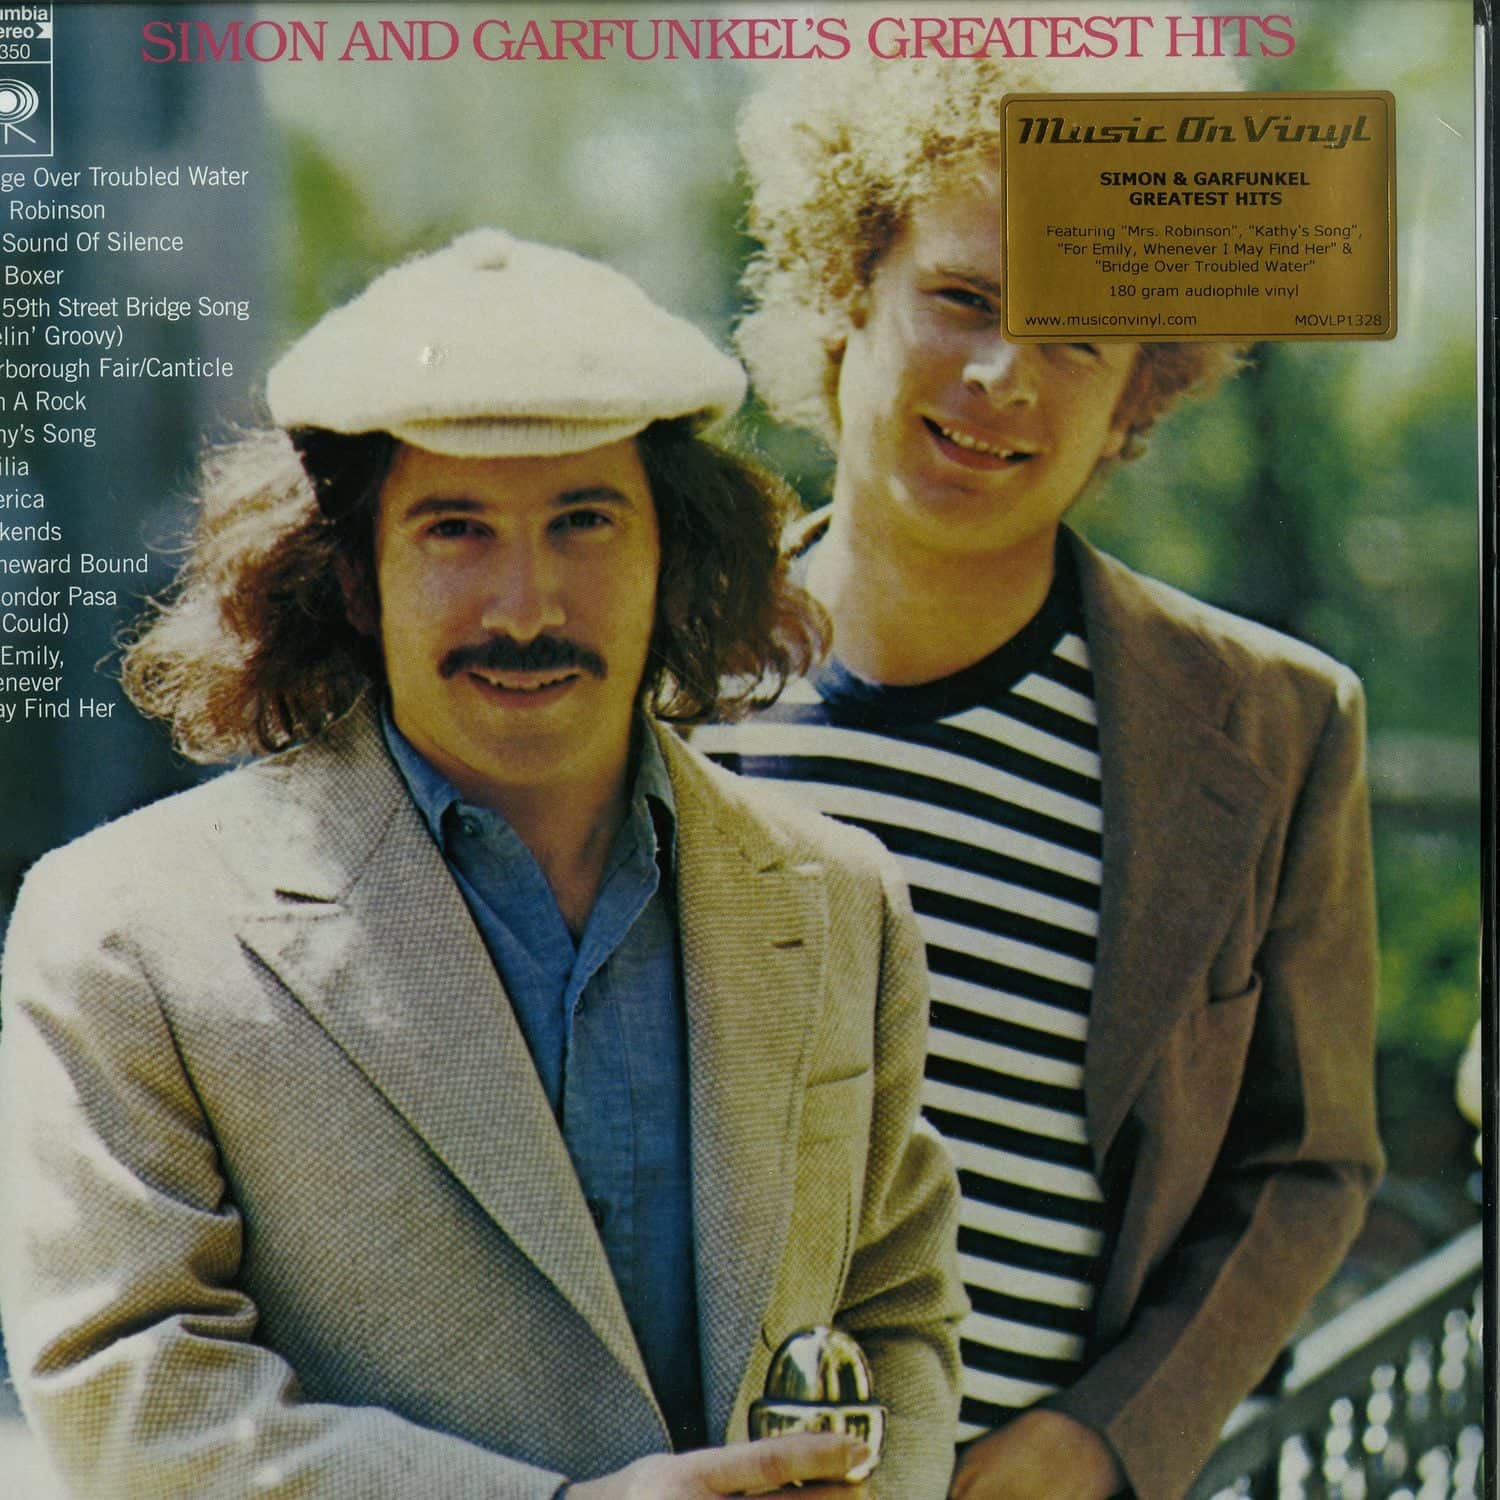 Simon & Garfunkel - GREATEST HITS 